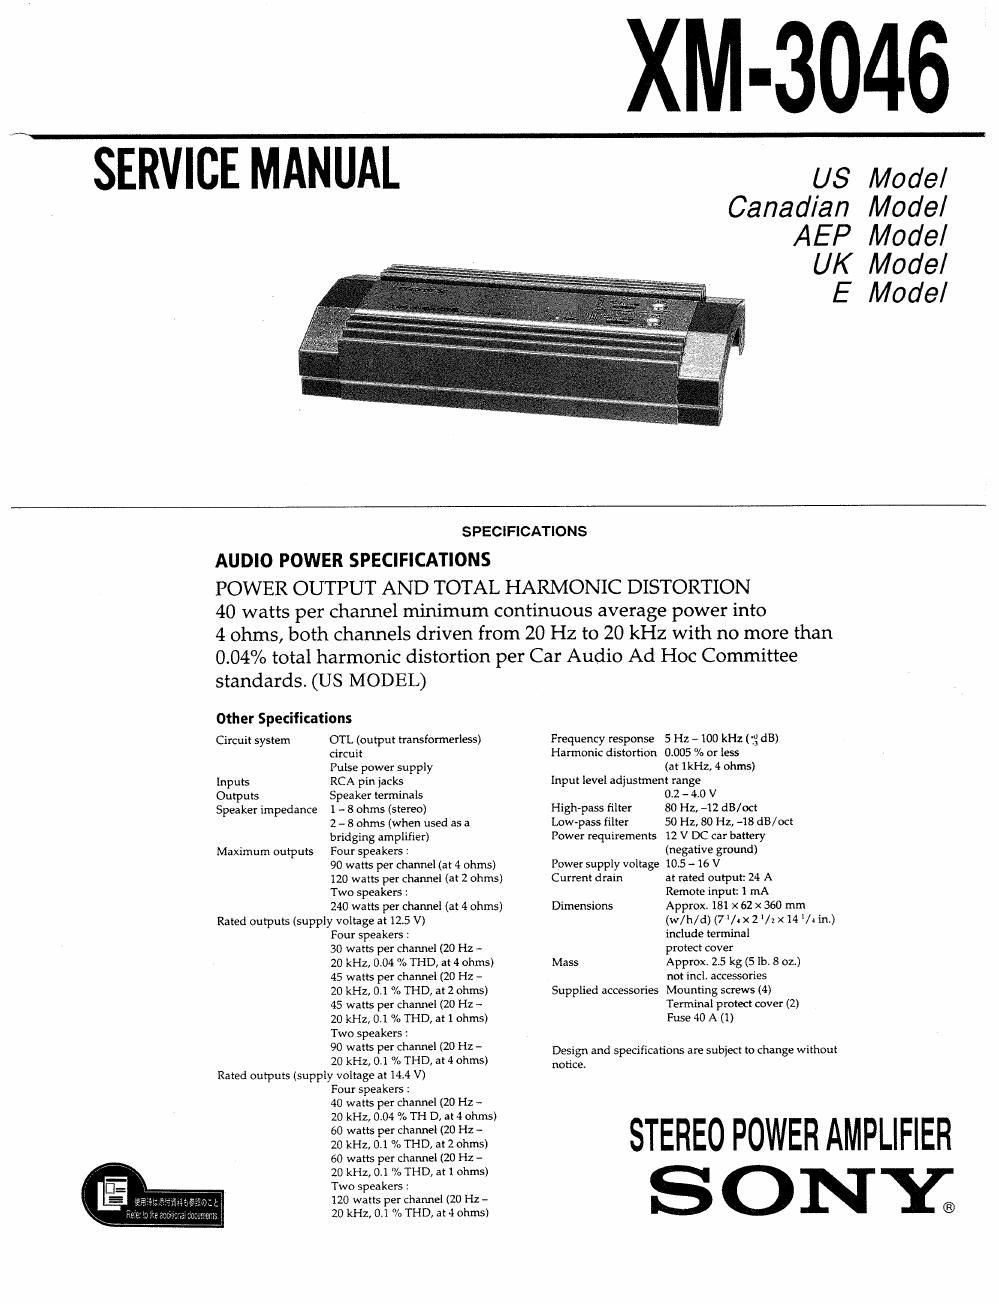 sony xm 3046 service manual